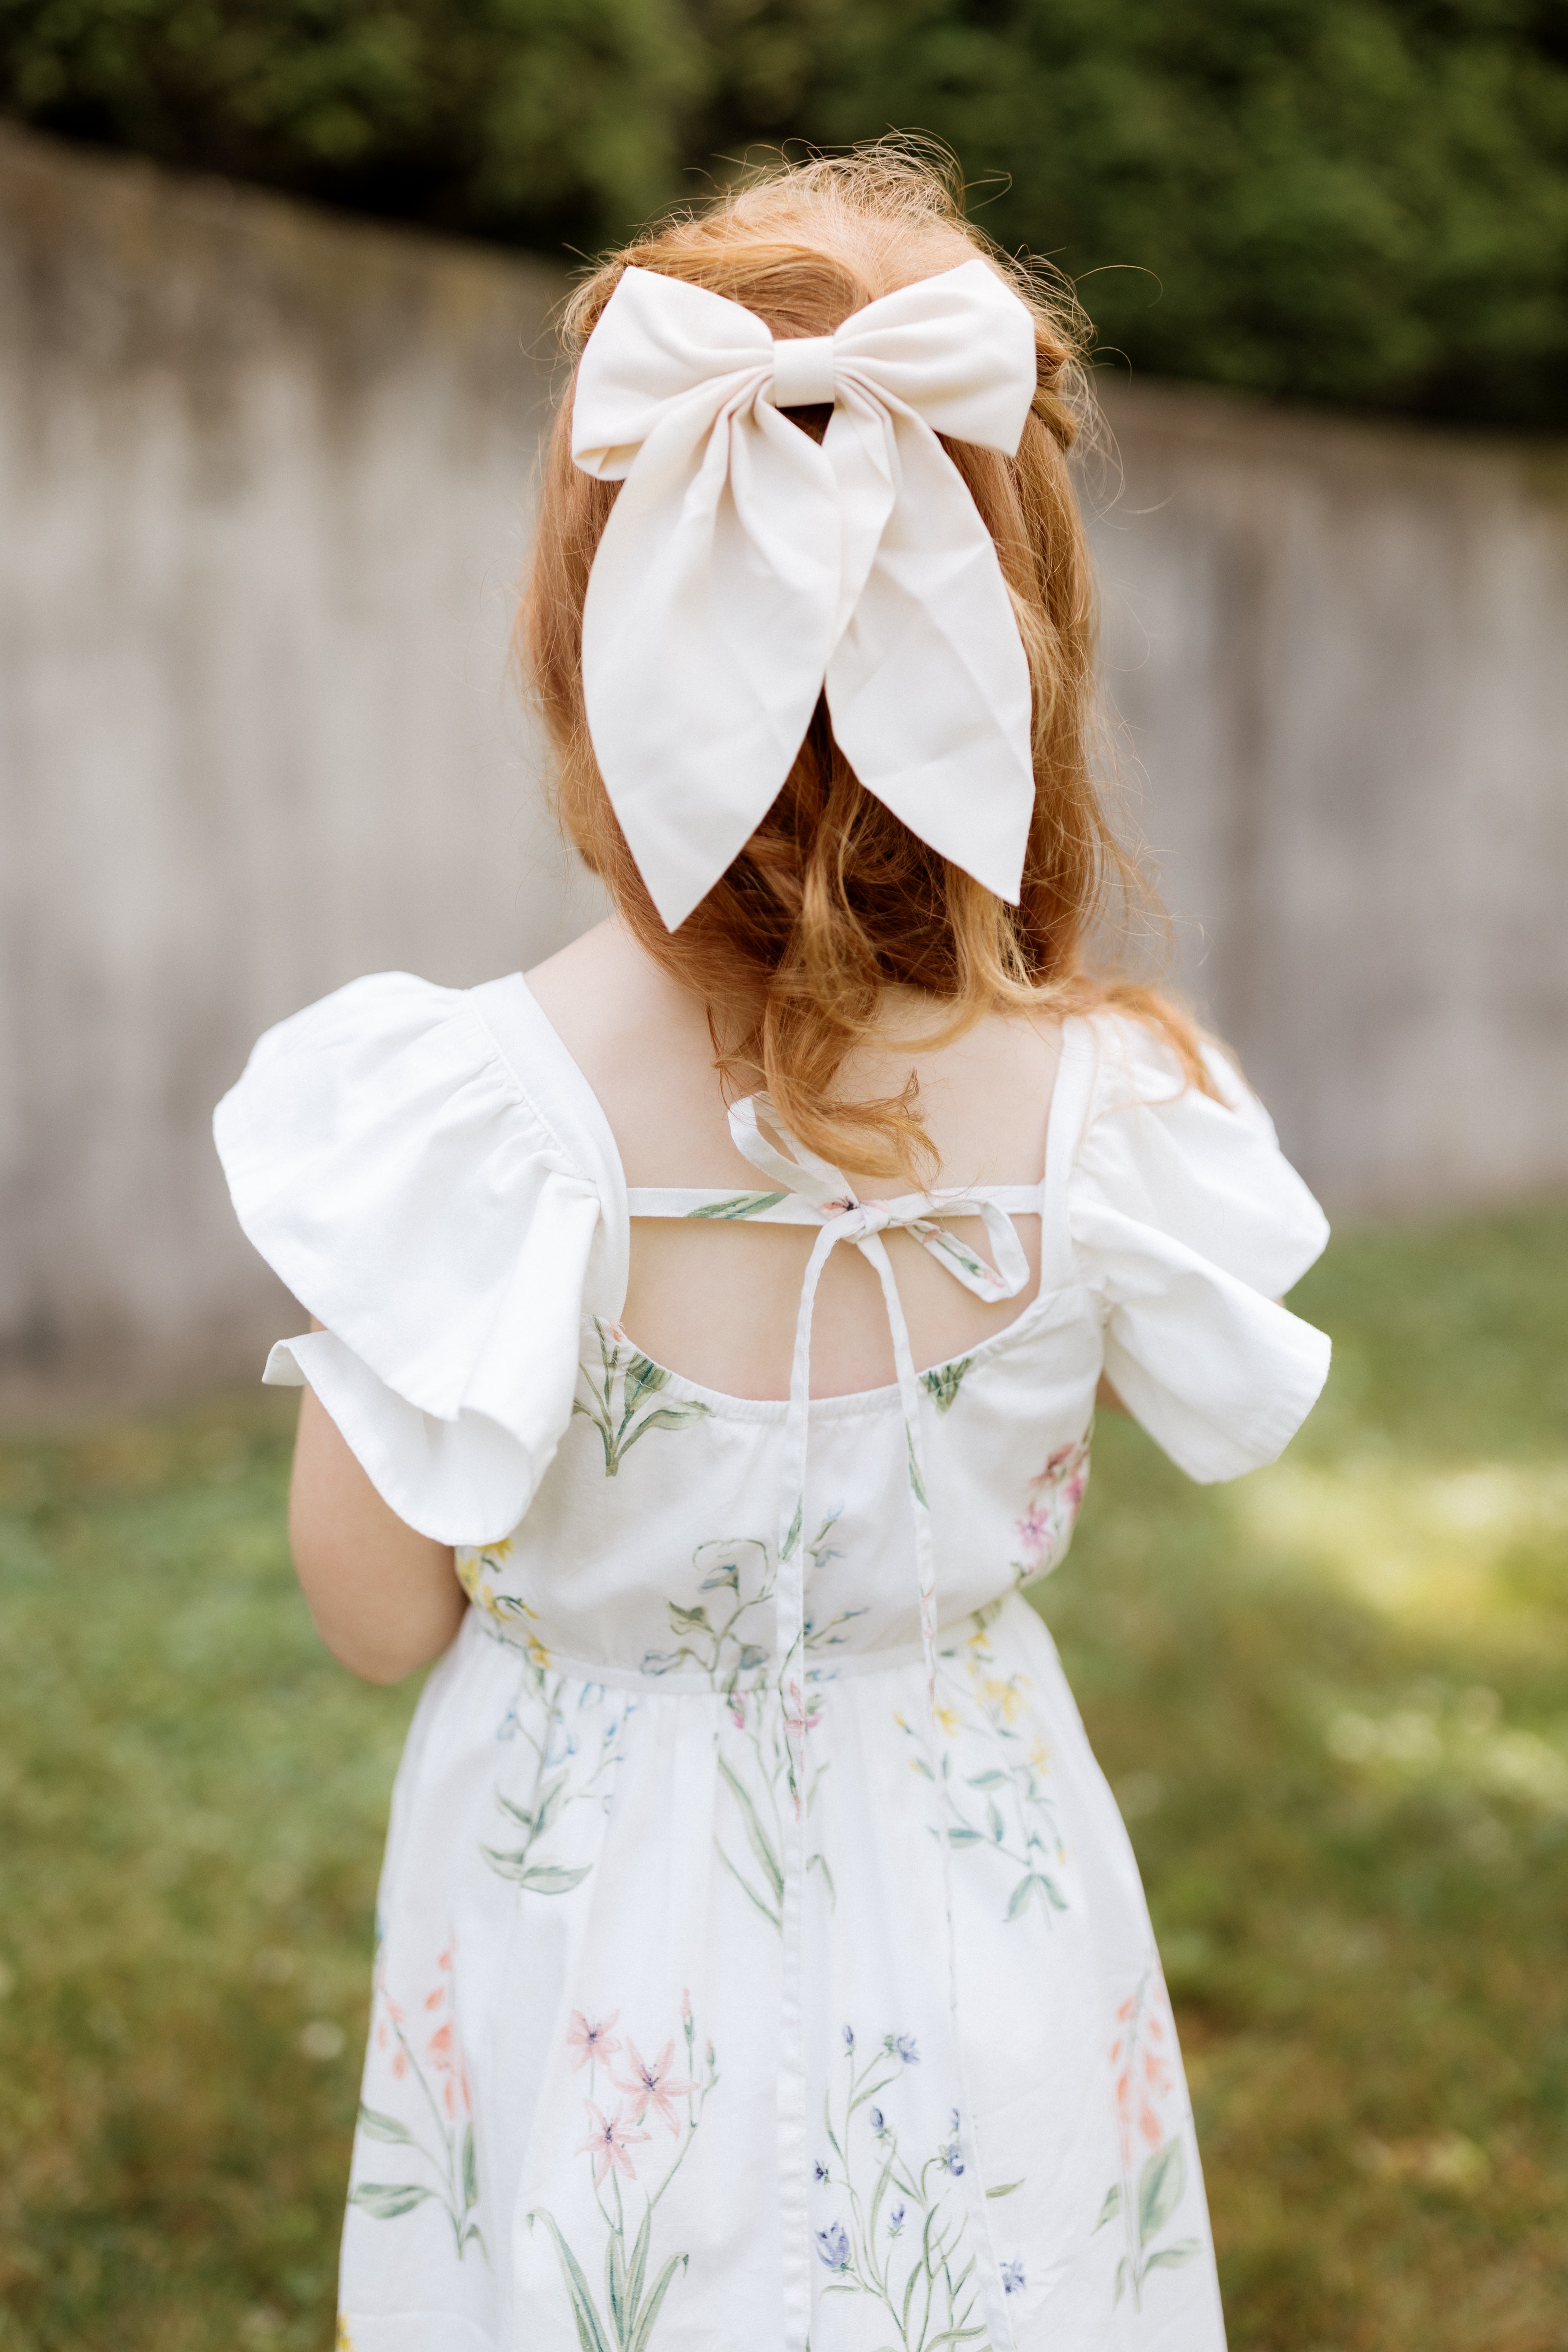 The Elle Girl Dress by Floraison